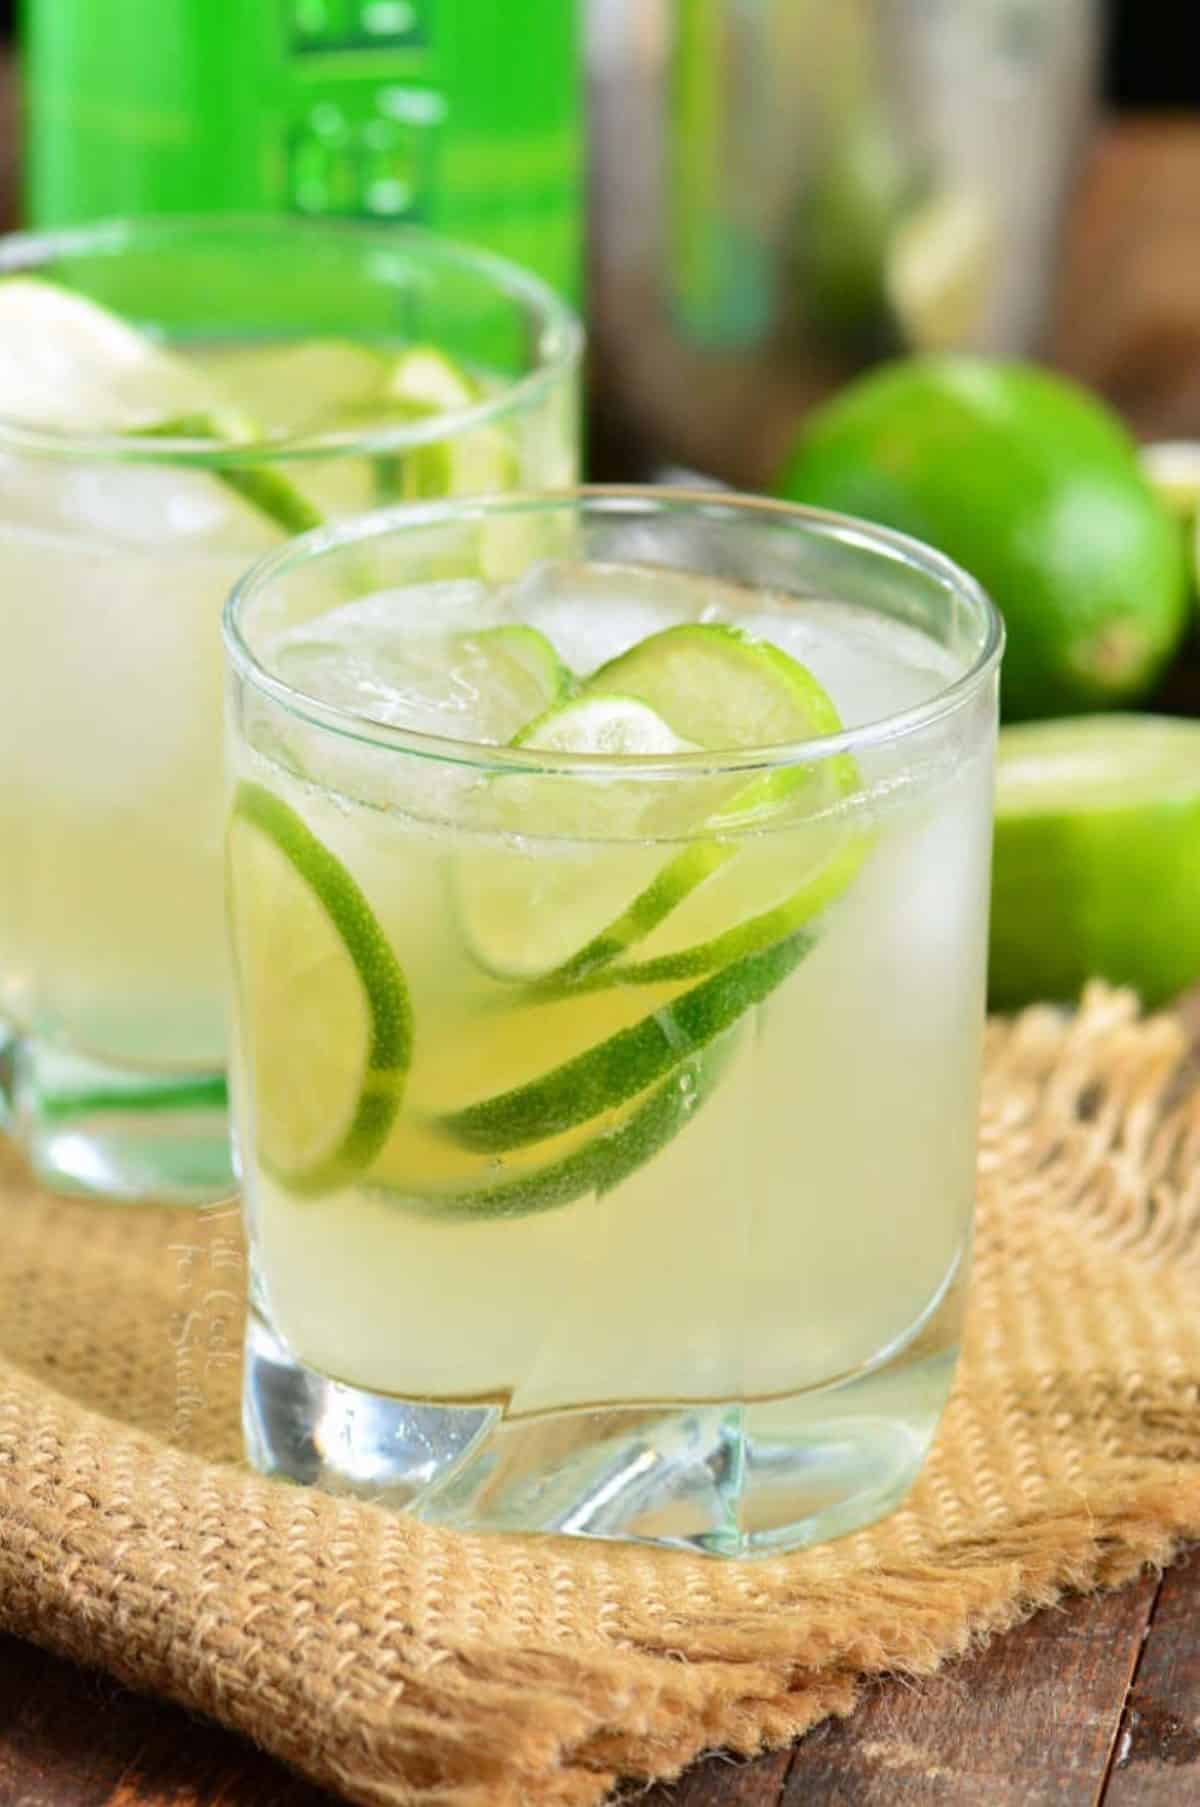 caipirinha in a short glass with ice and lemons.